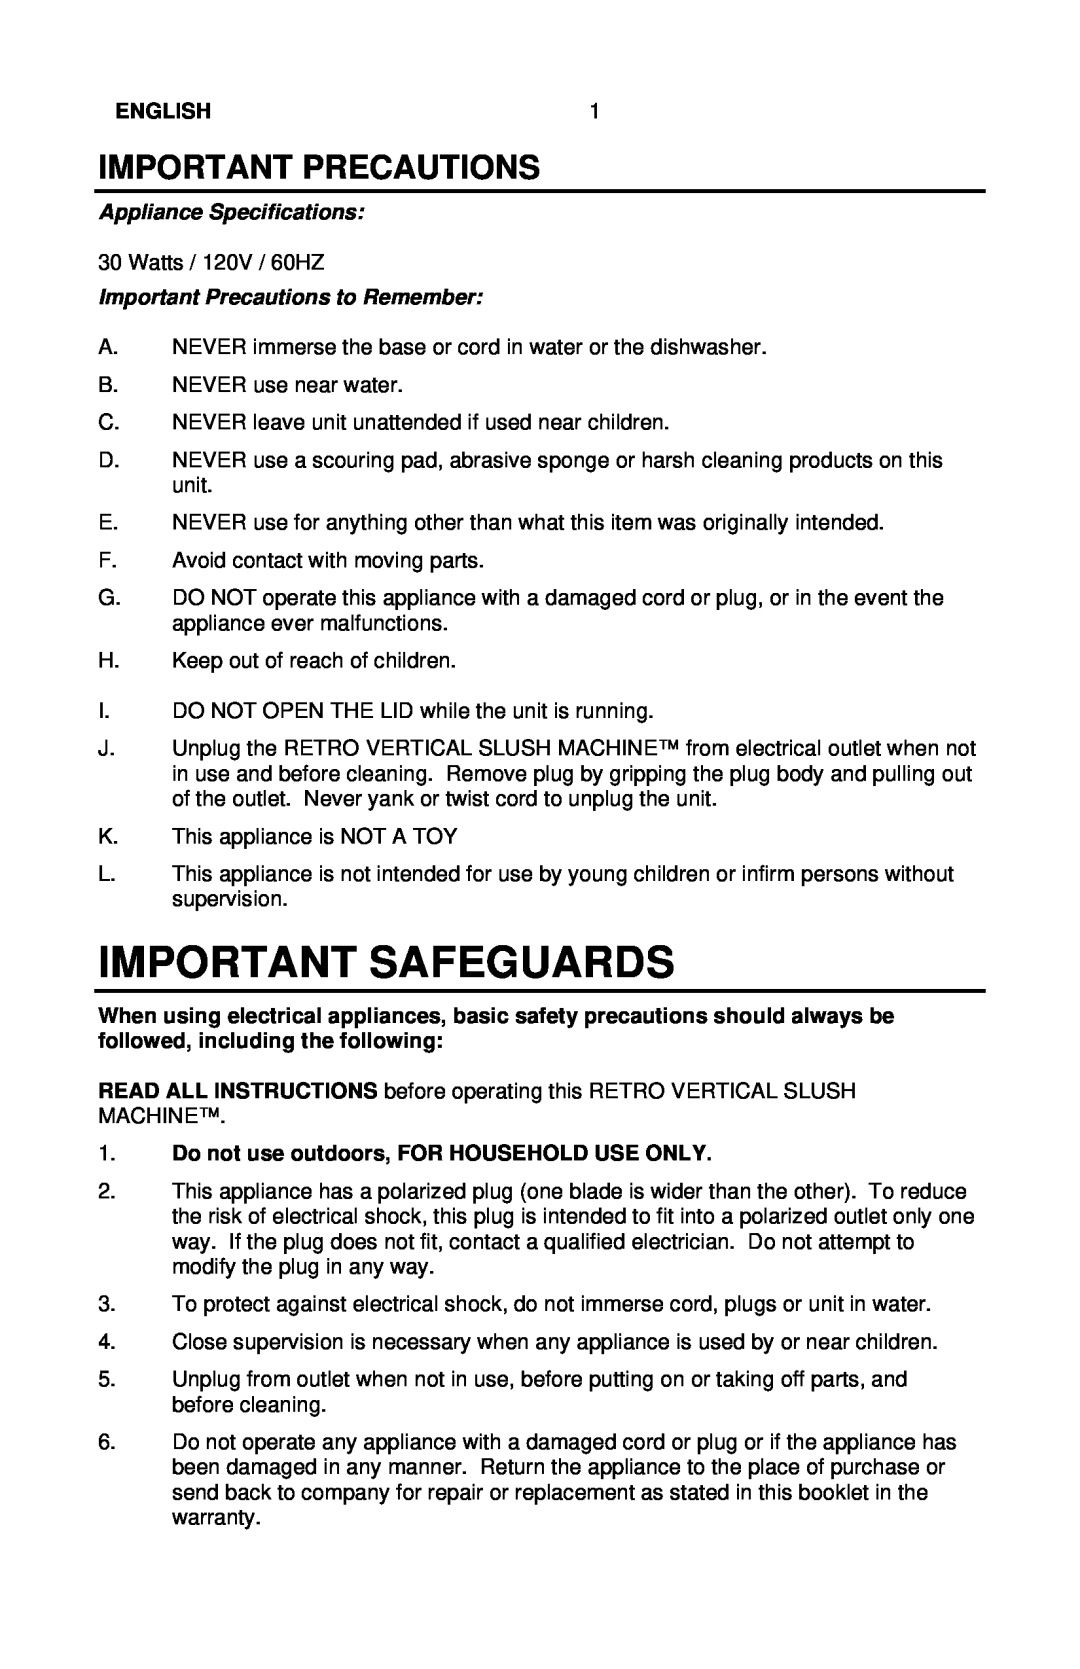 Nostalgia Electrics RSM-650 manual Important Safeguards, Important Precautions, English, Appliance Specifications 